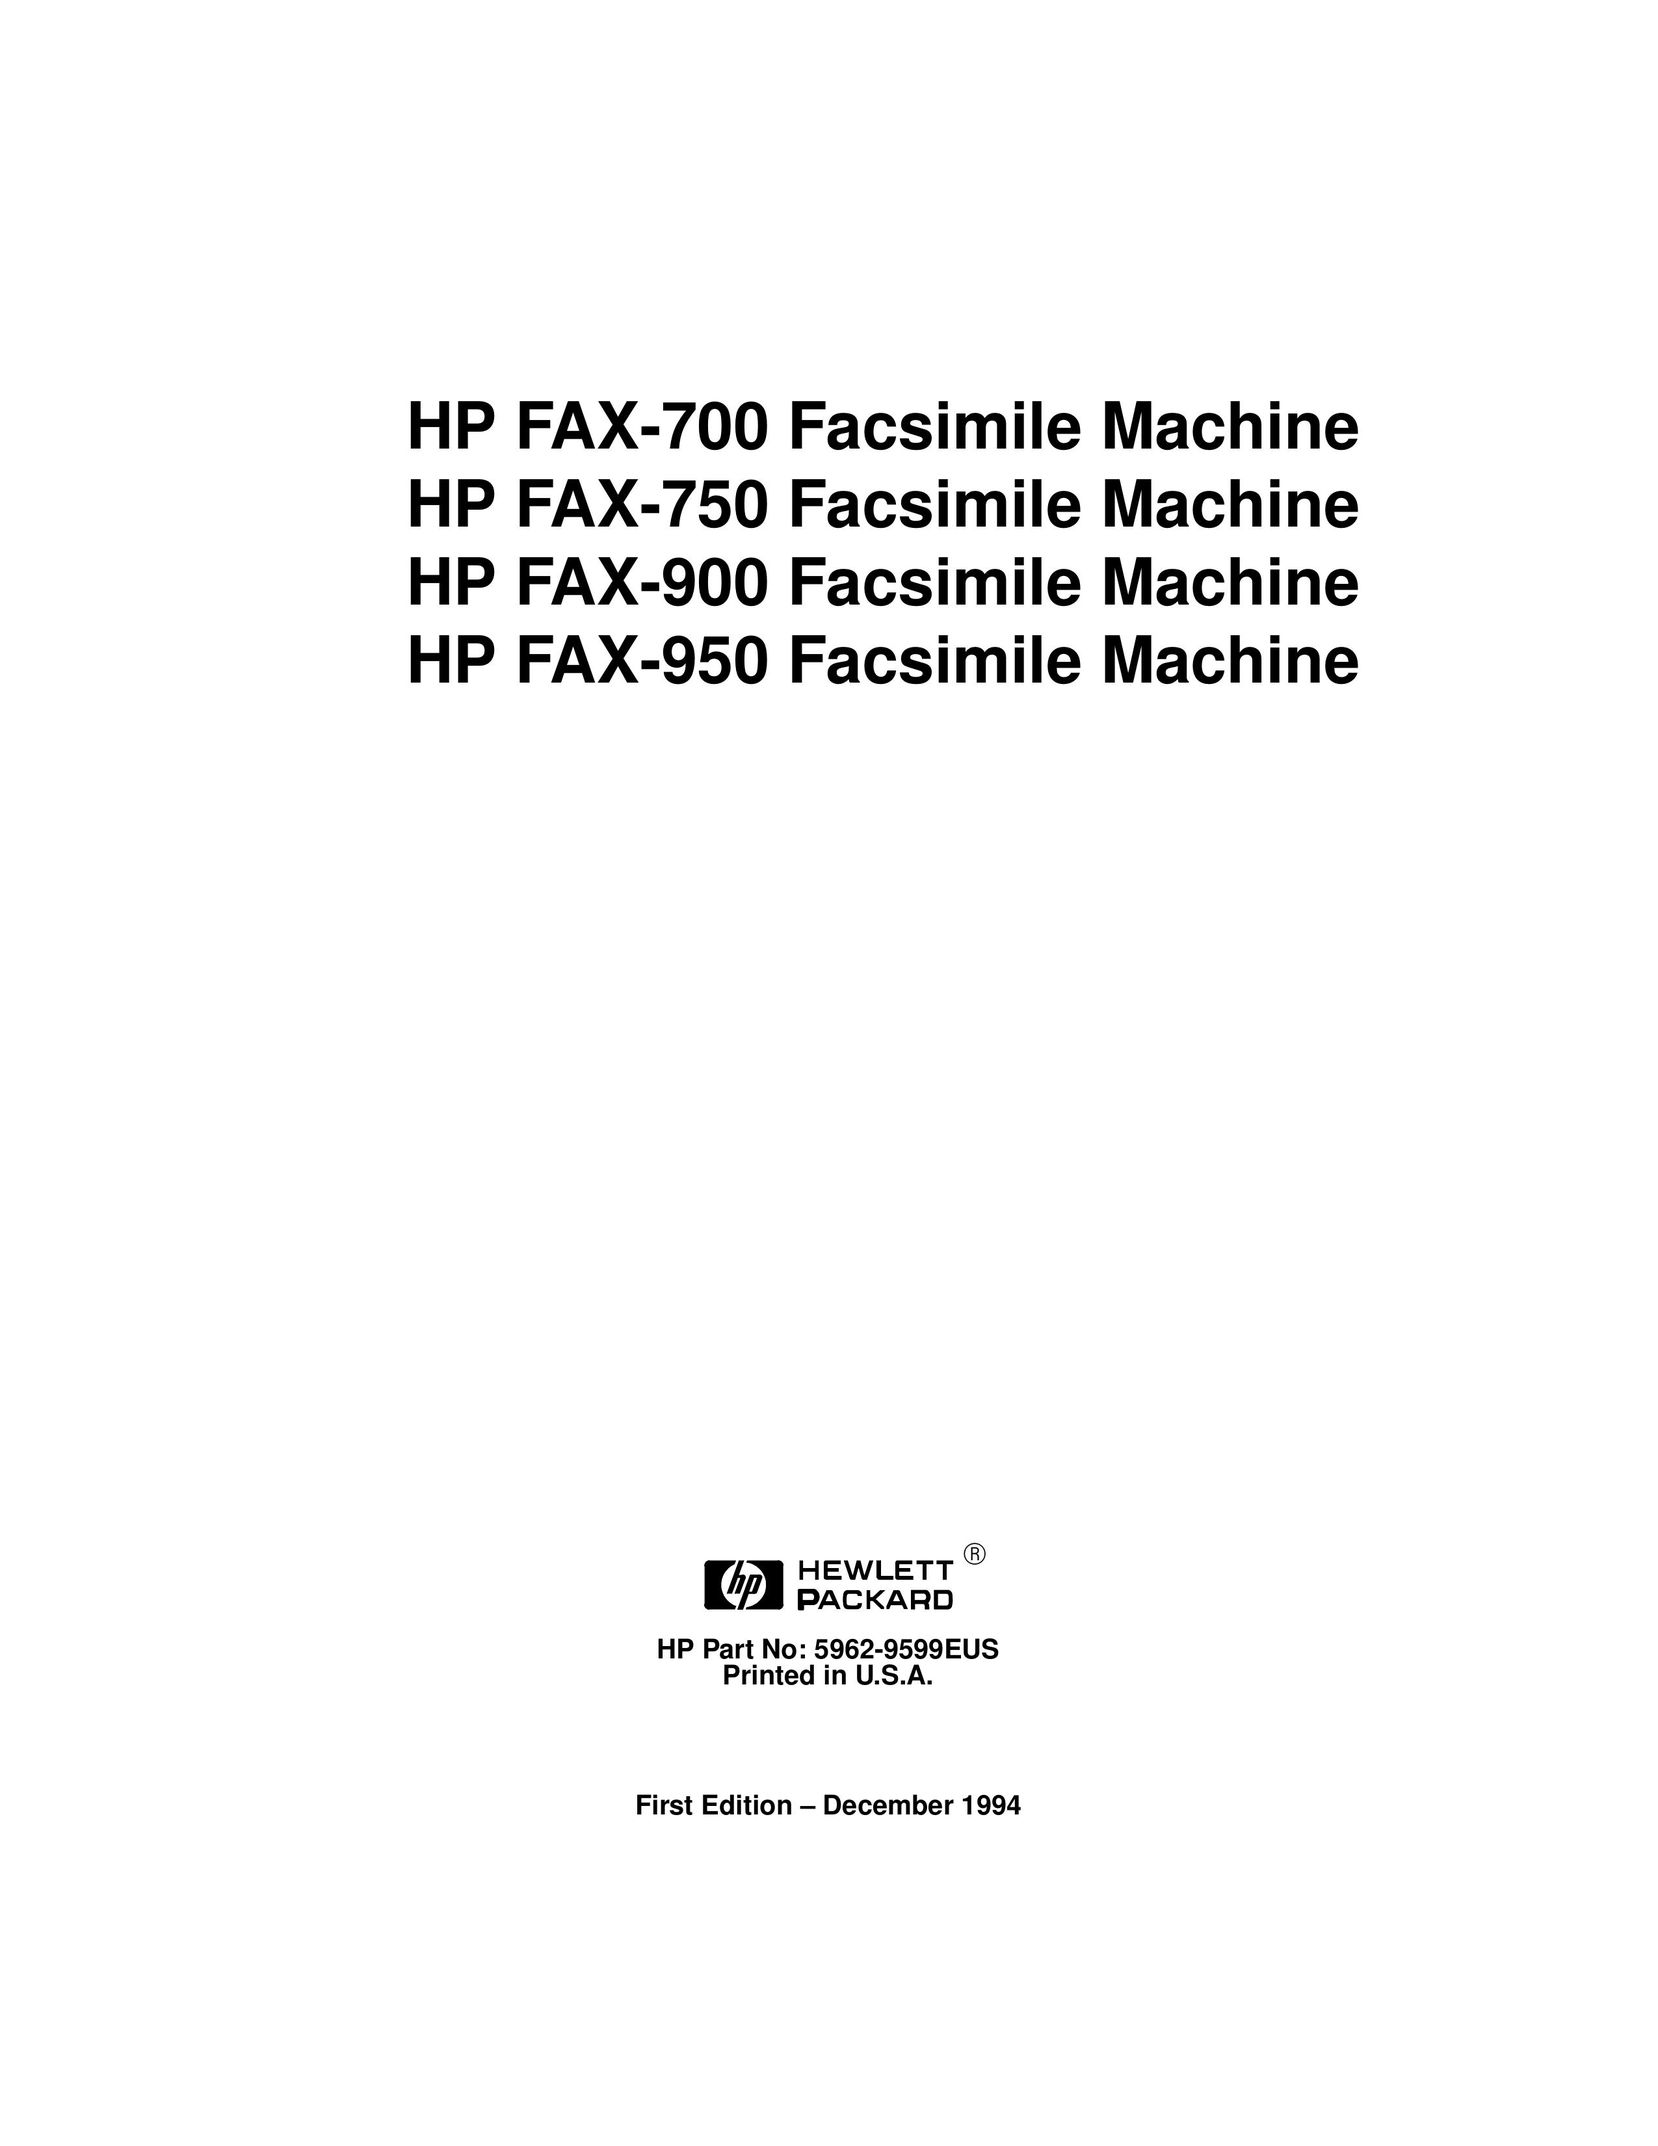 HP (Hewlett-Packard) HP FAX-750 Fax Machine User Manual